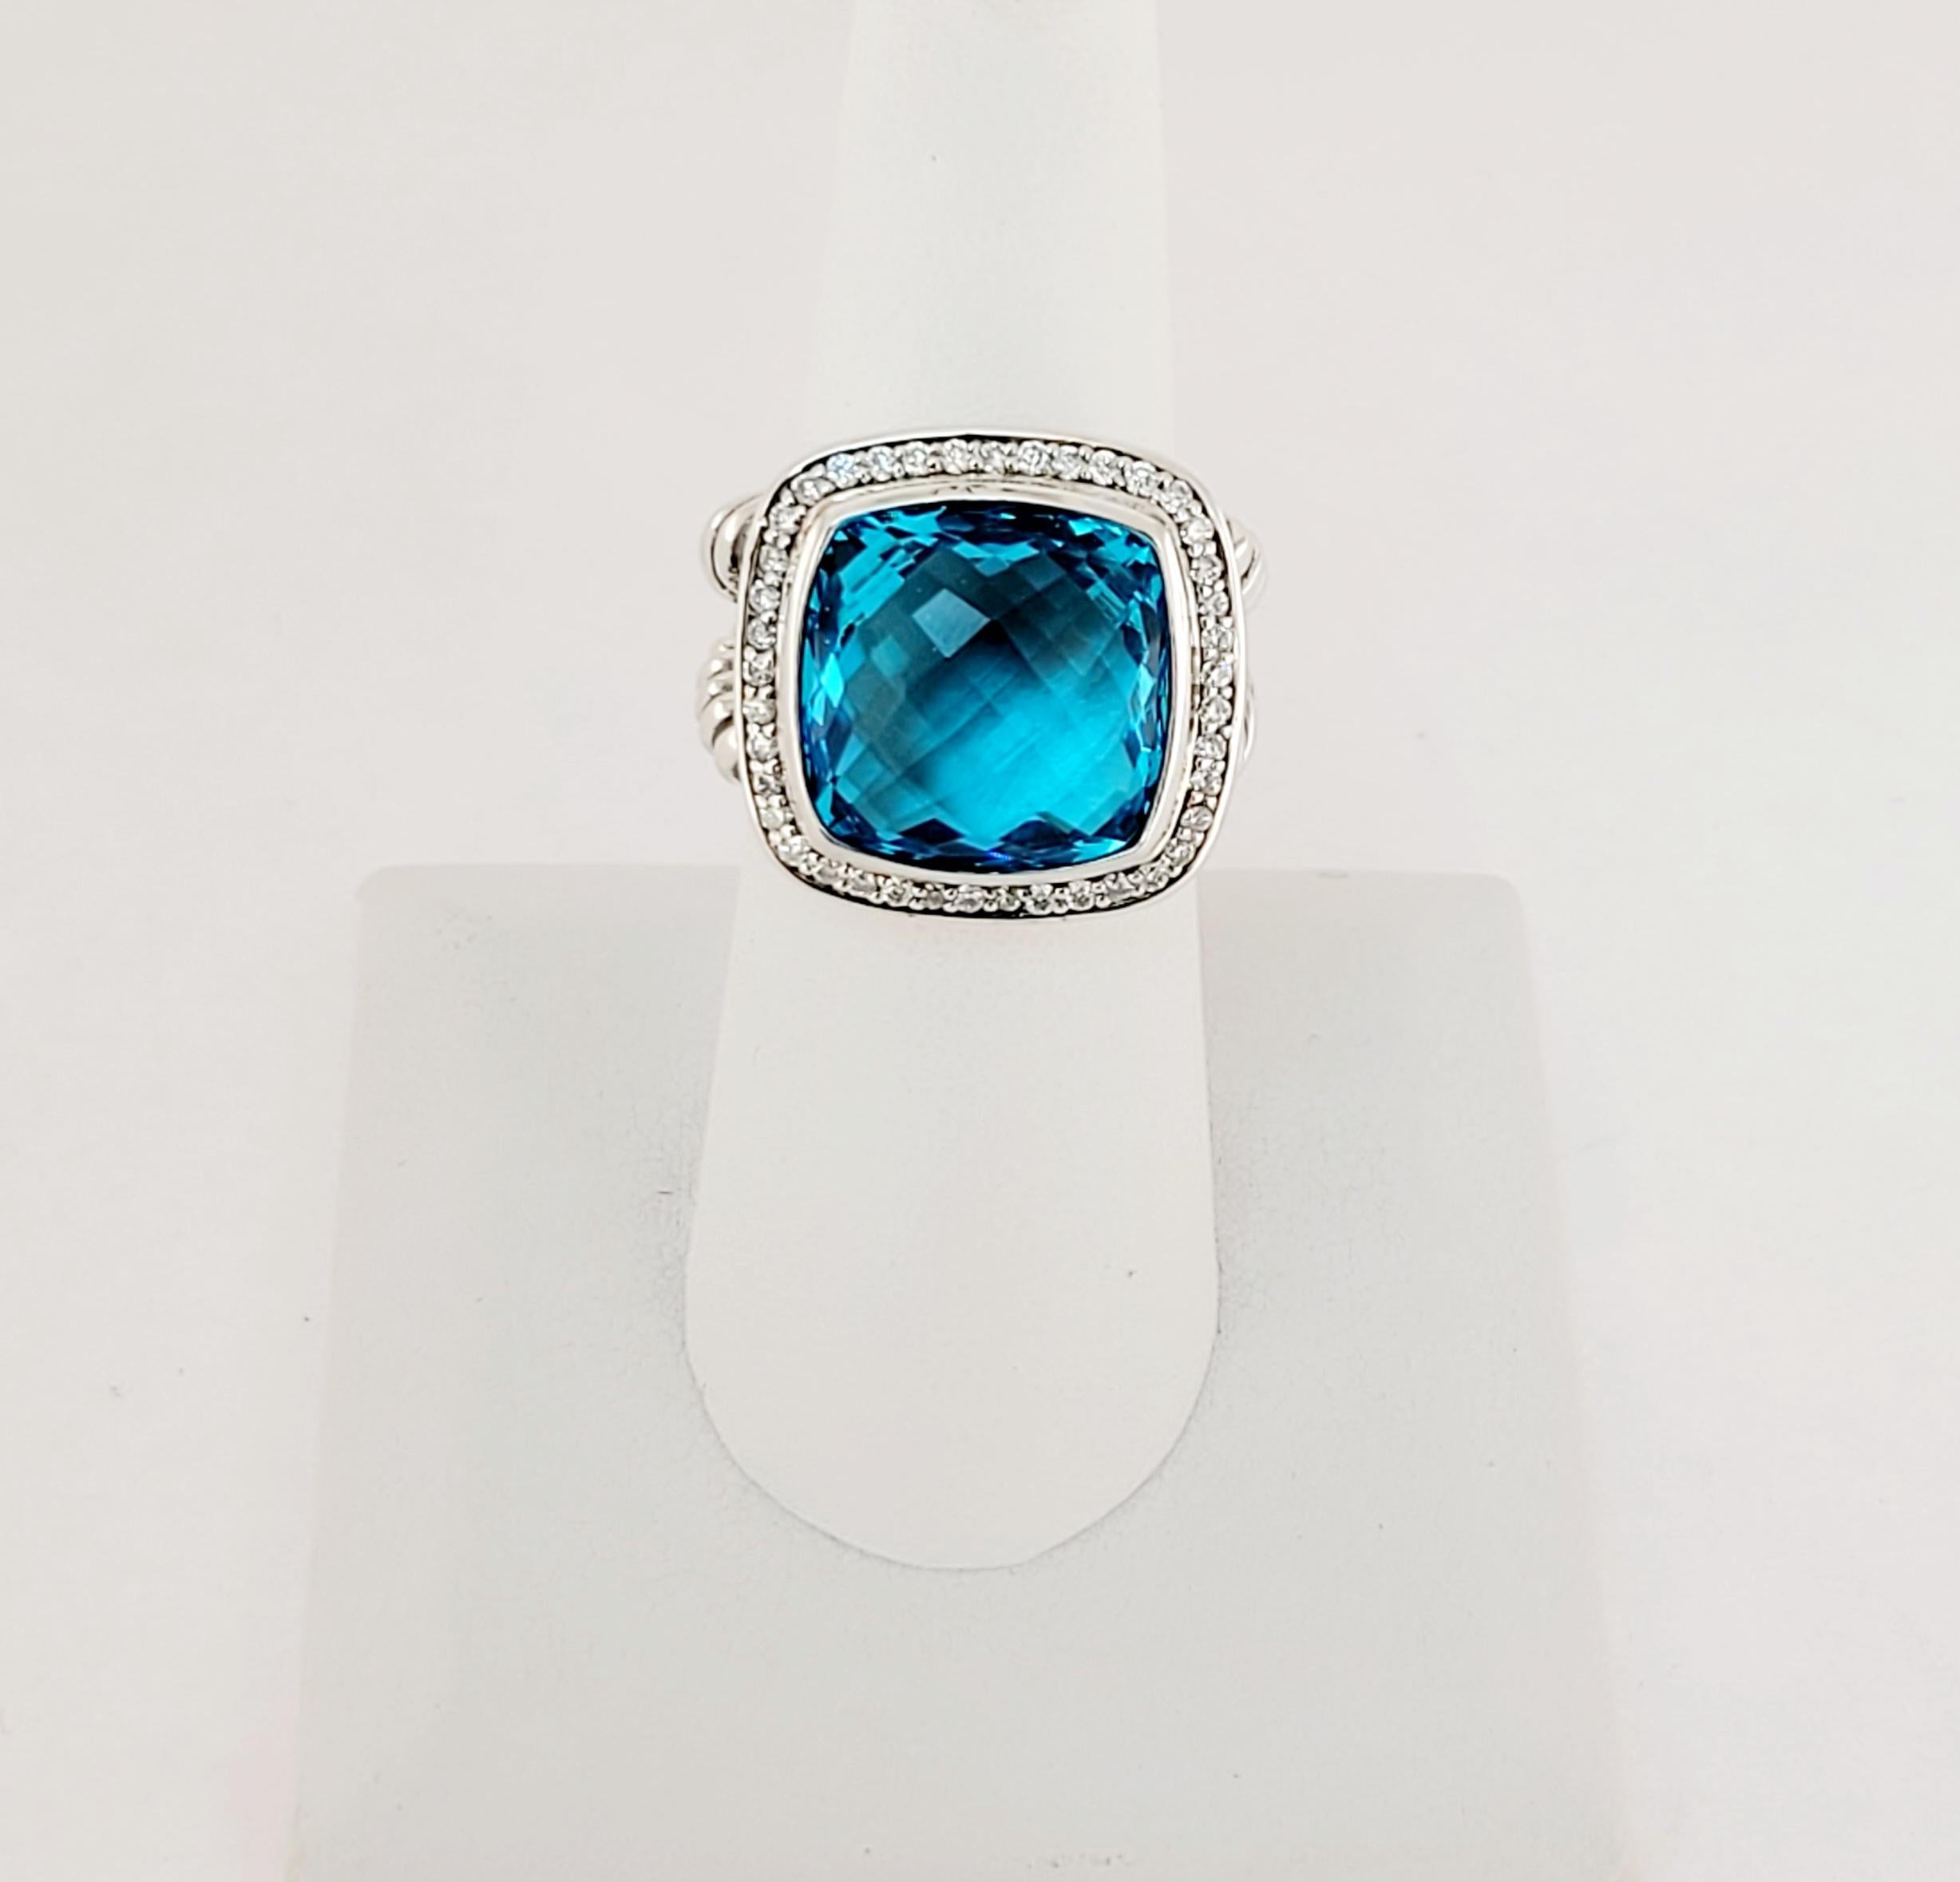 David yurman ring blue topas with diamond Size 6.75 2